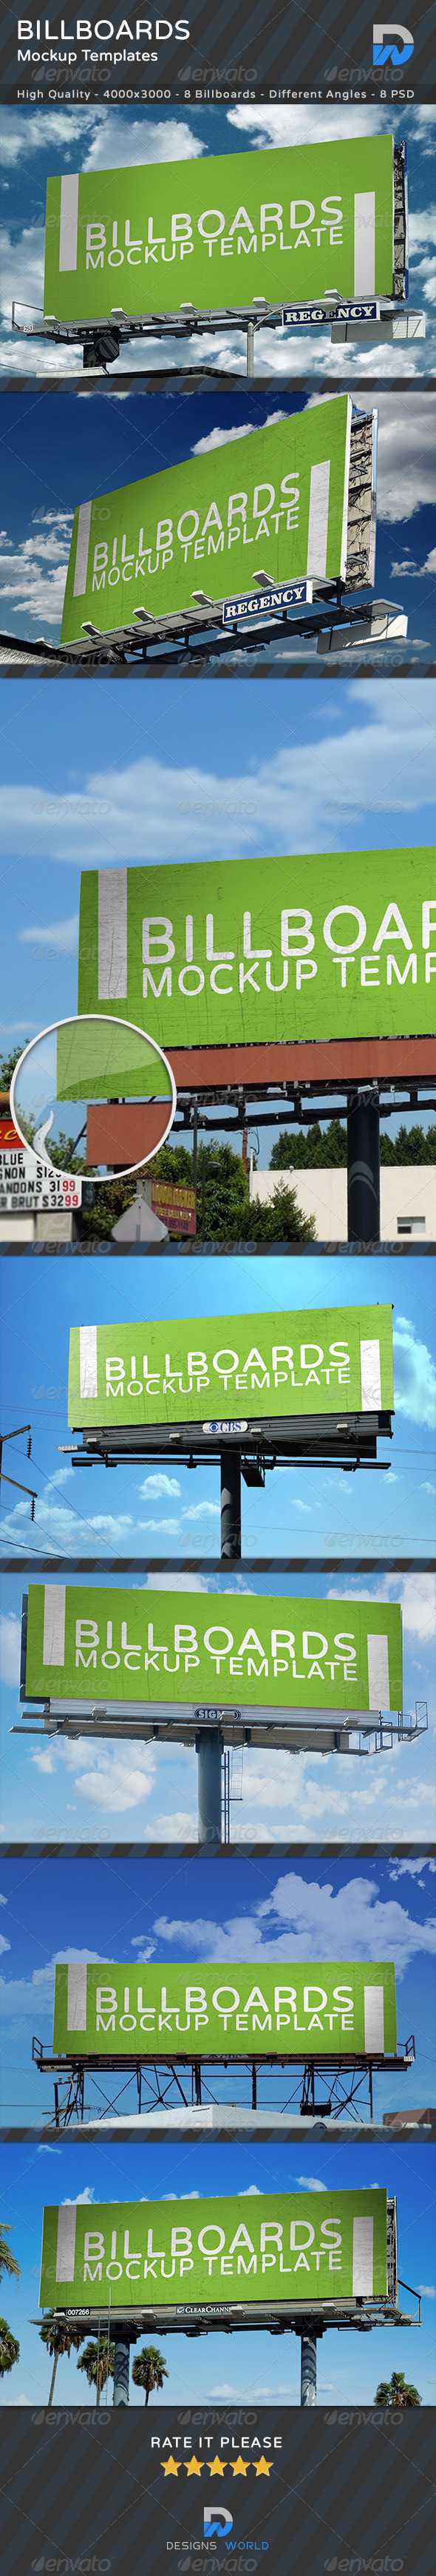 Billboards mockup preview